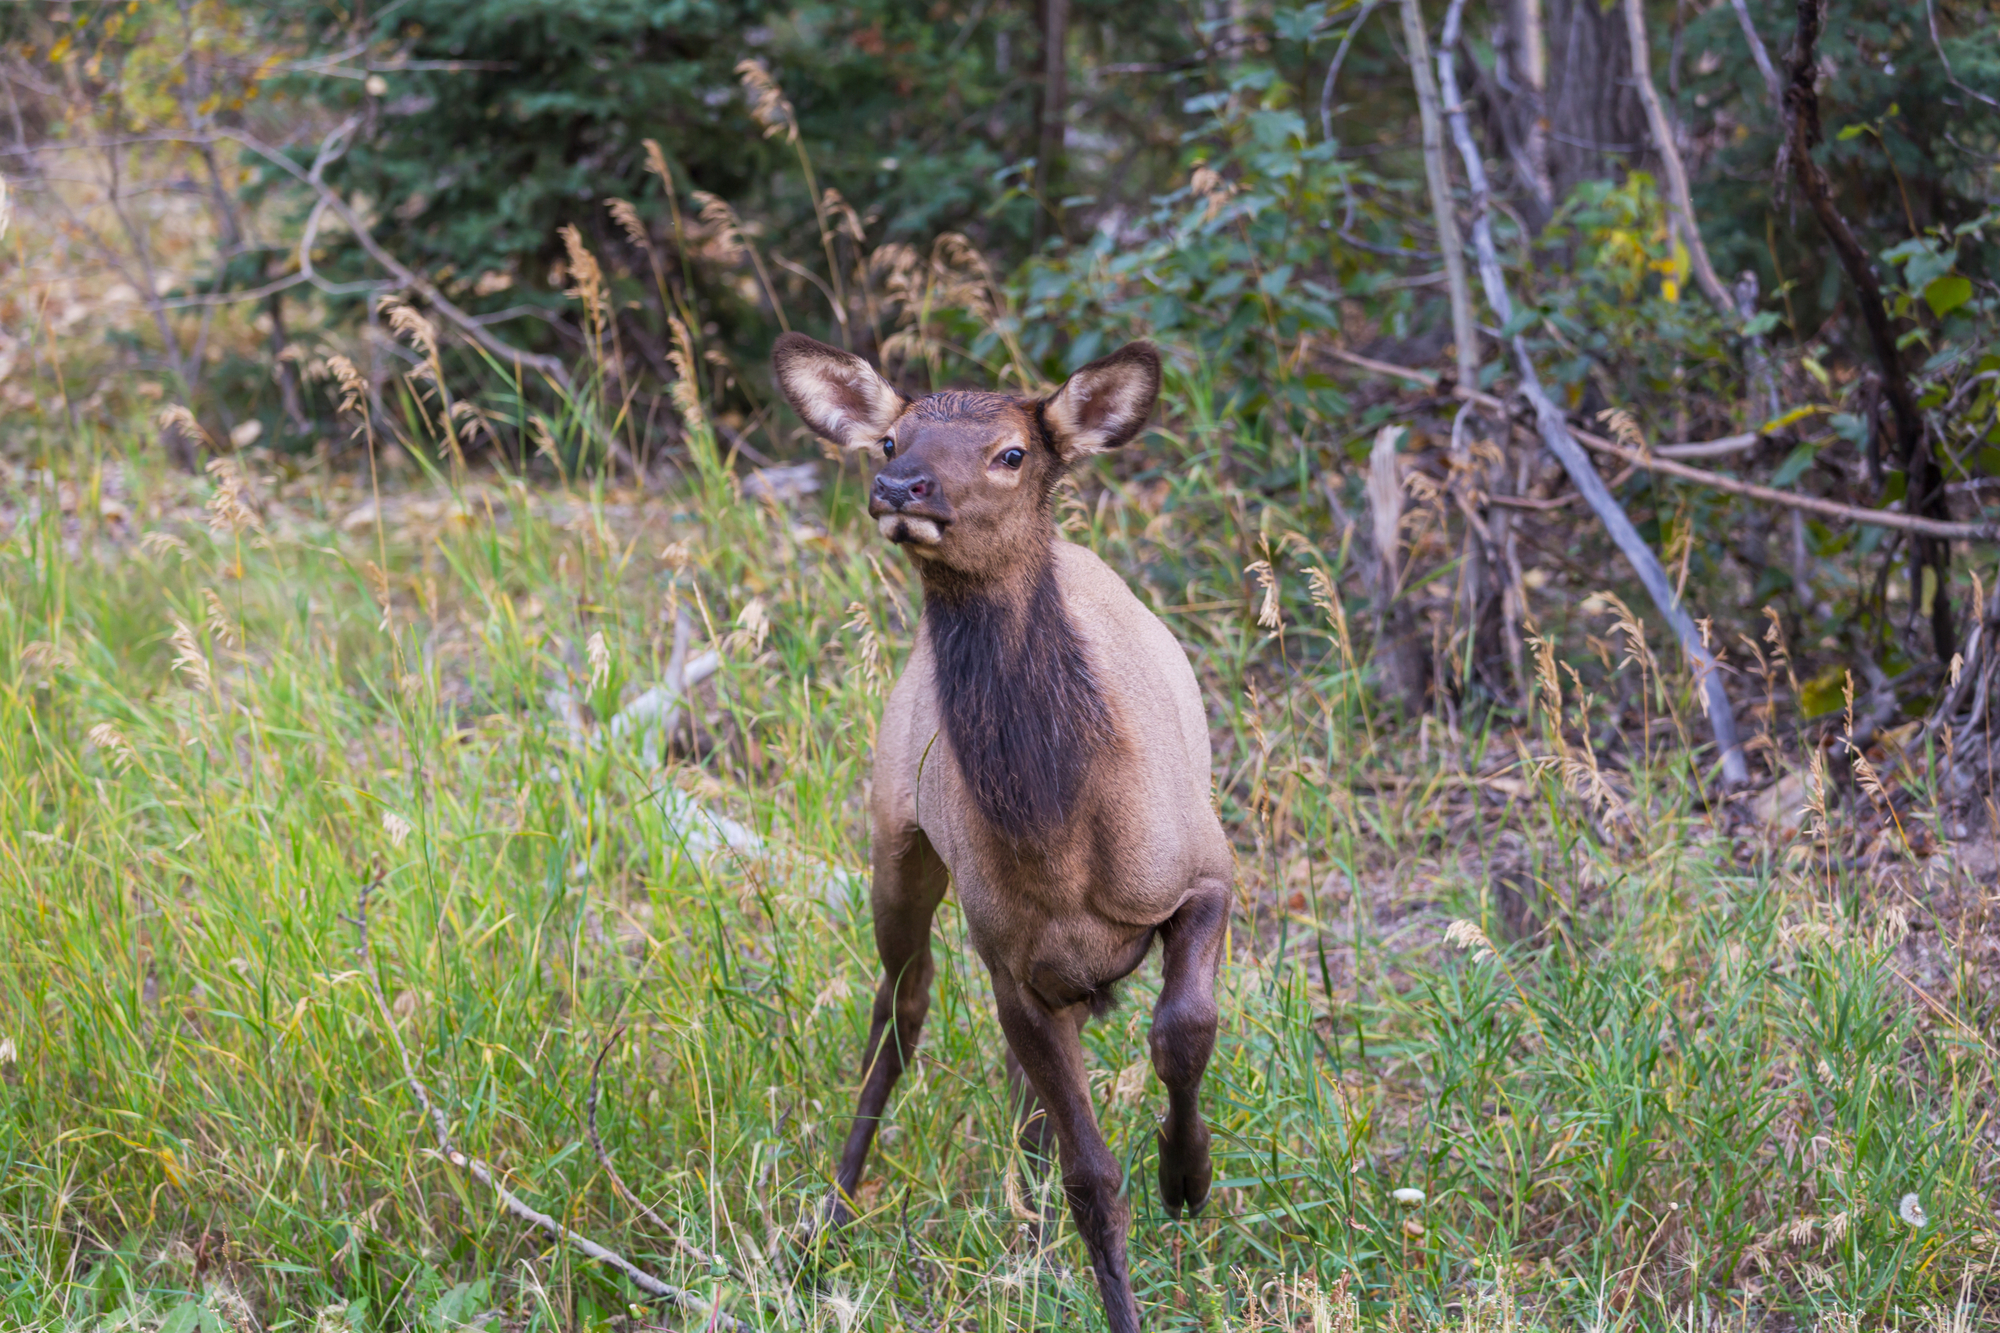 Elk calf. Image Credit: Galyna Andrushko, Envato Elements.